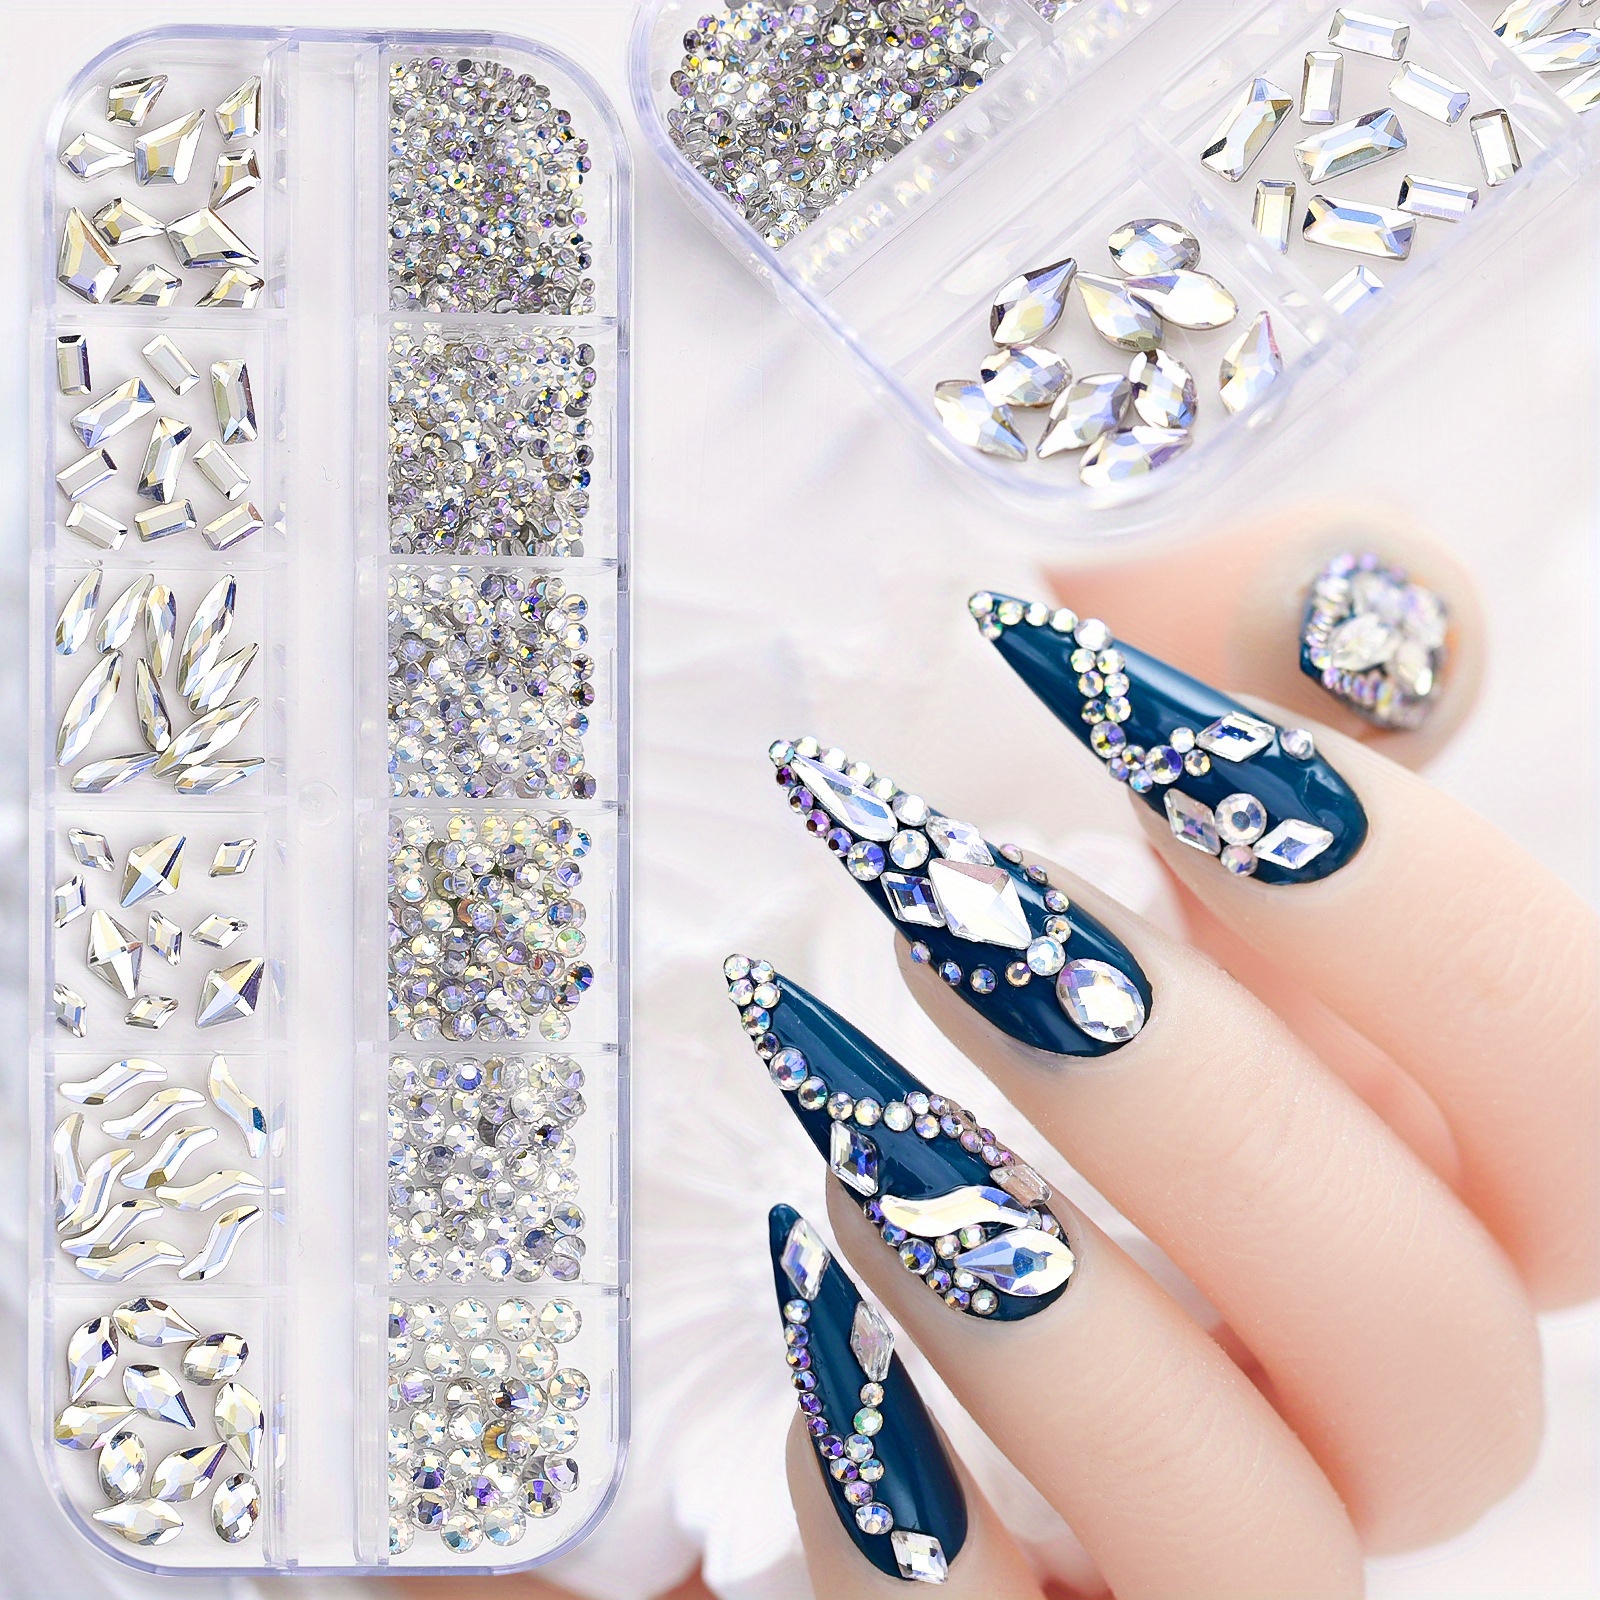 12 Girds Nail Rhinestones AB Crystal Glitter Sliver Diamond Manicure 3D Gems